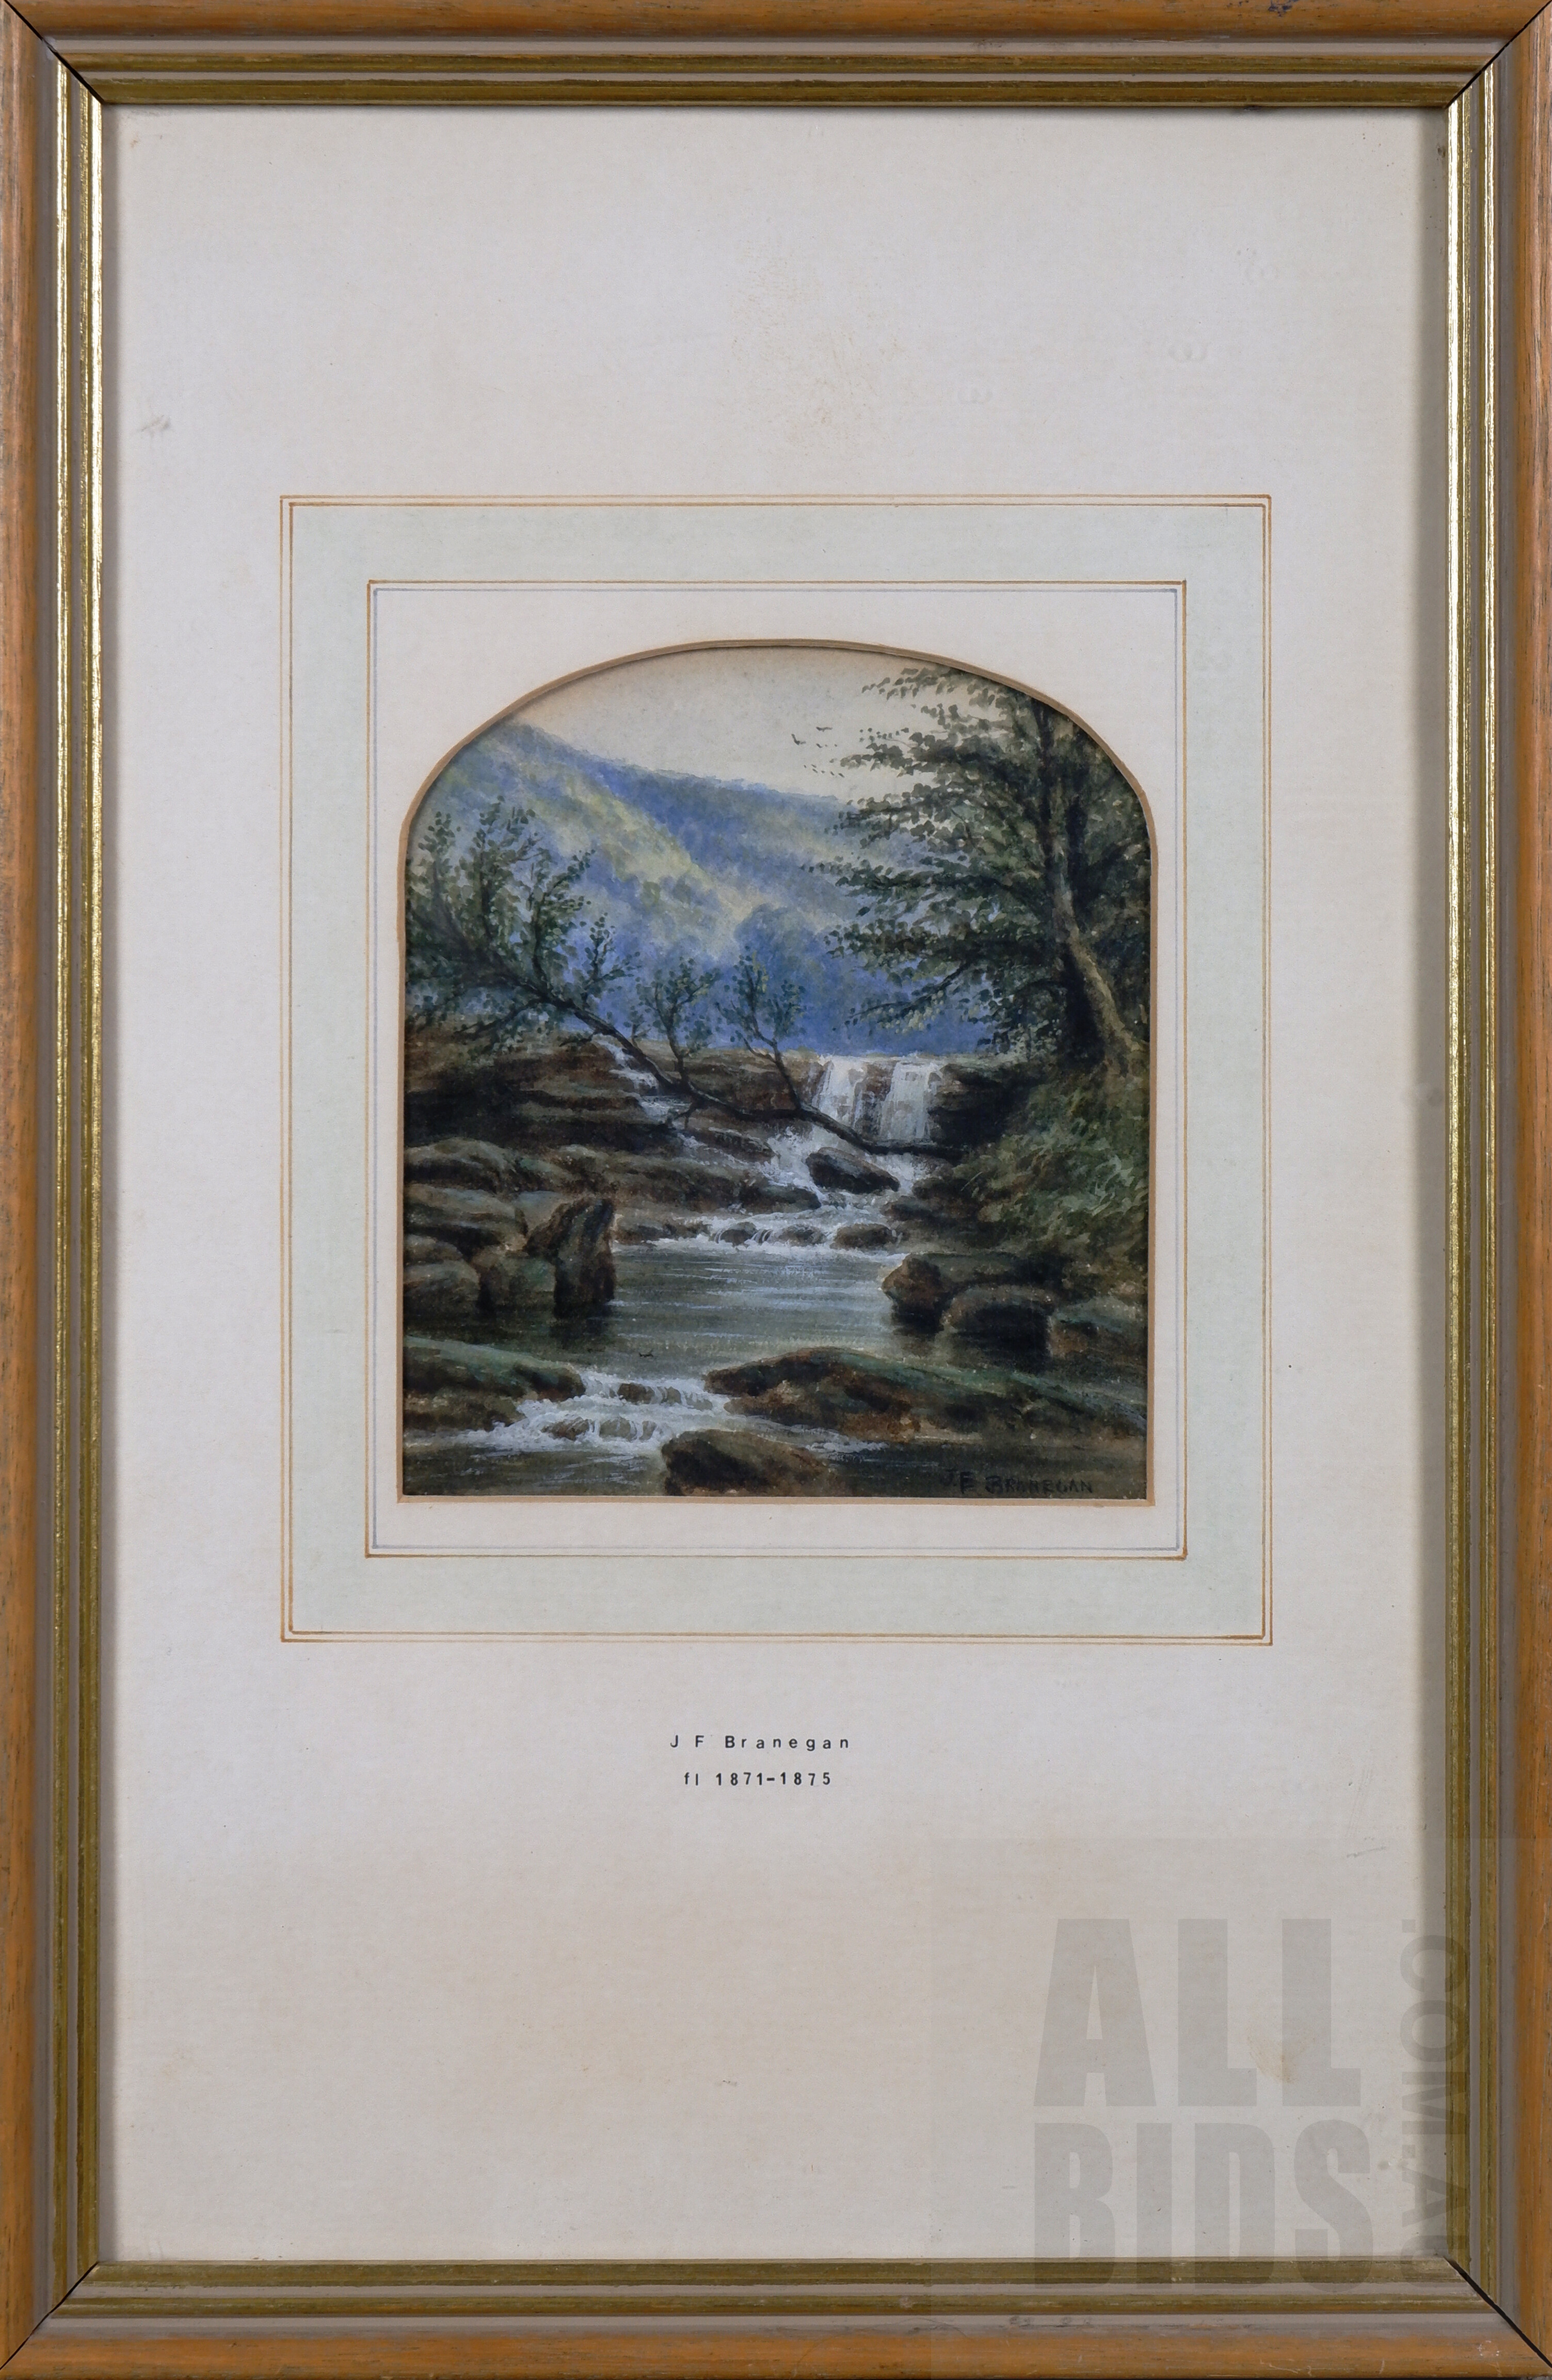 'J. F. Branegan (active 1870s, British), A Mountain River, Watercolour, 14 x 12.5 cm'